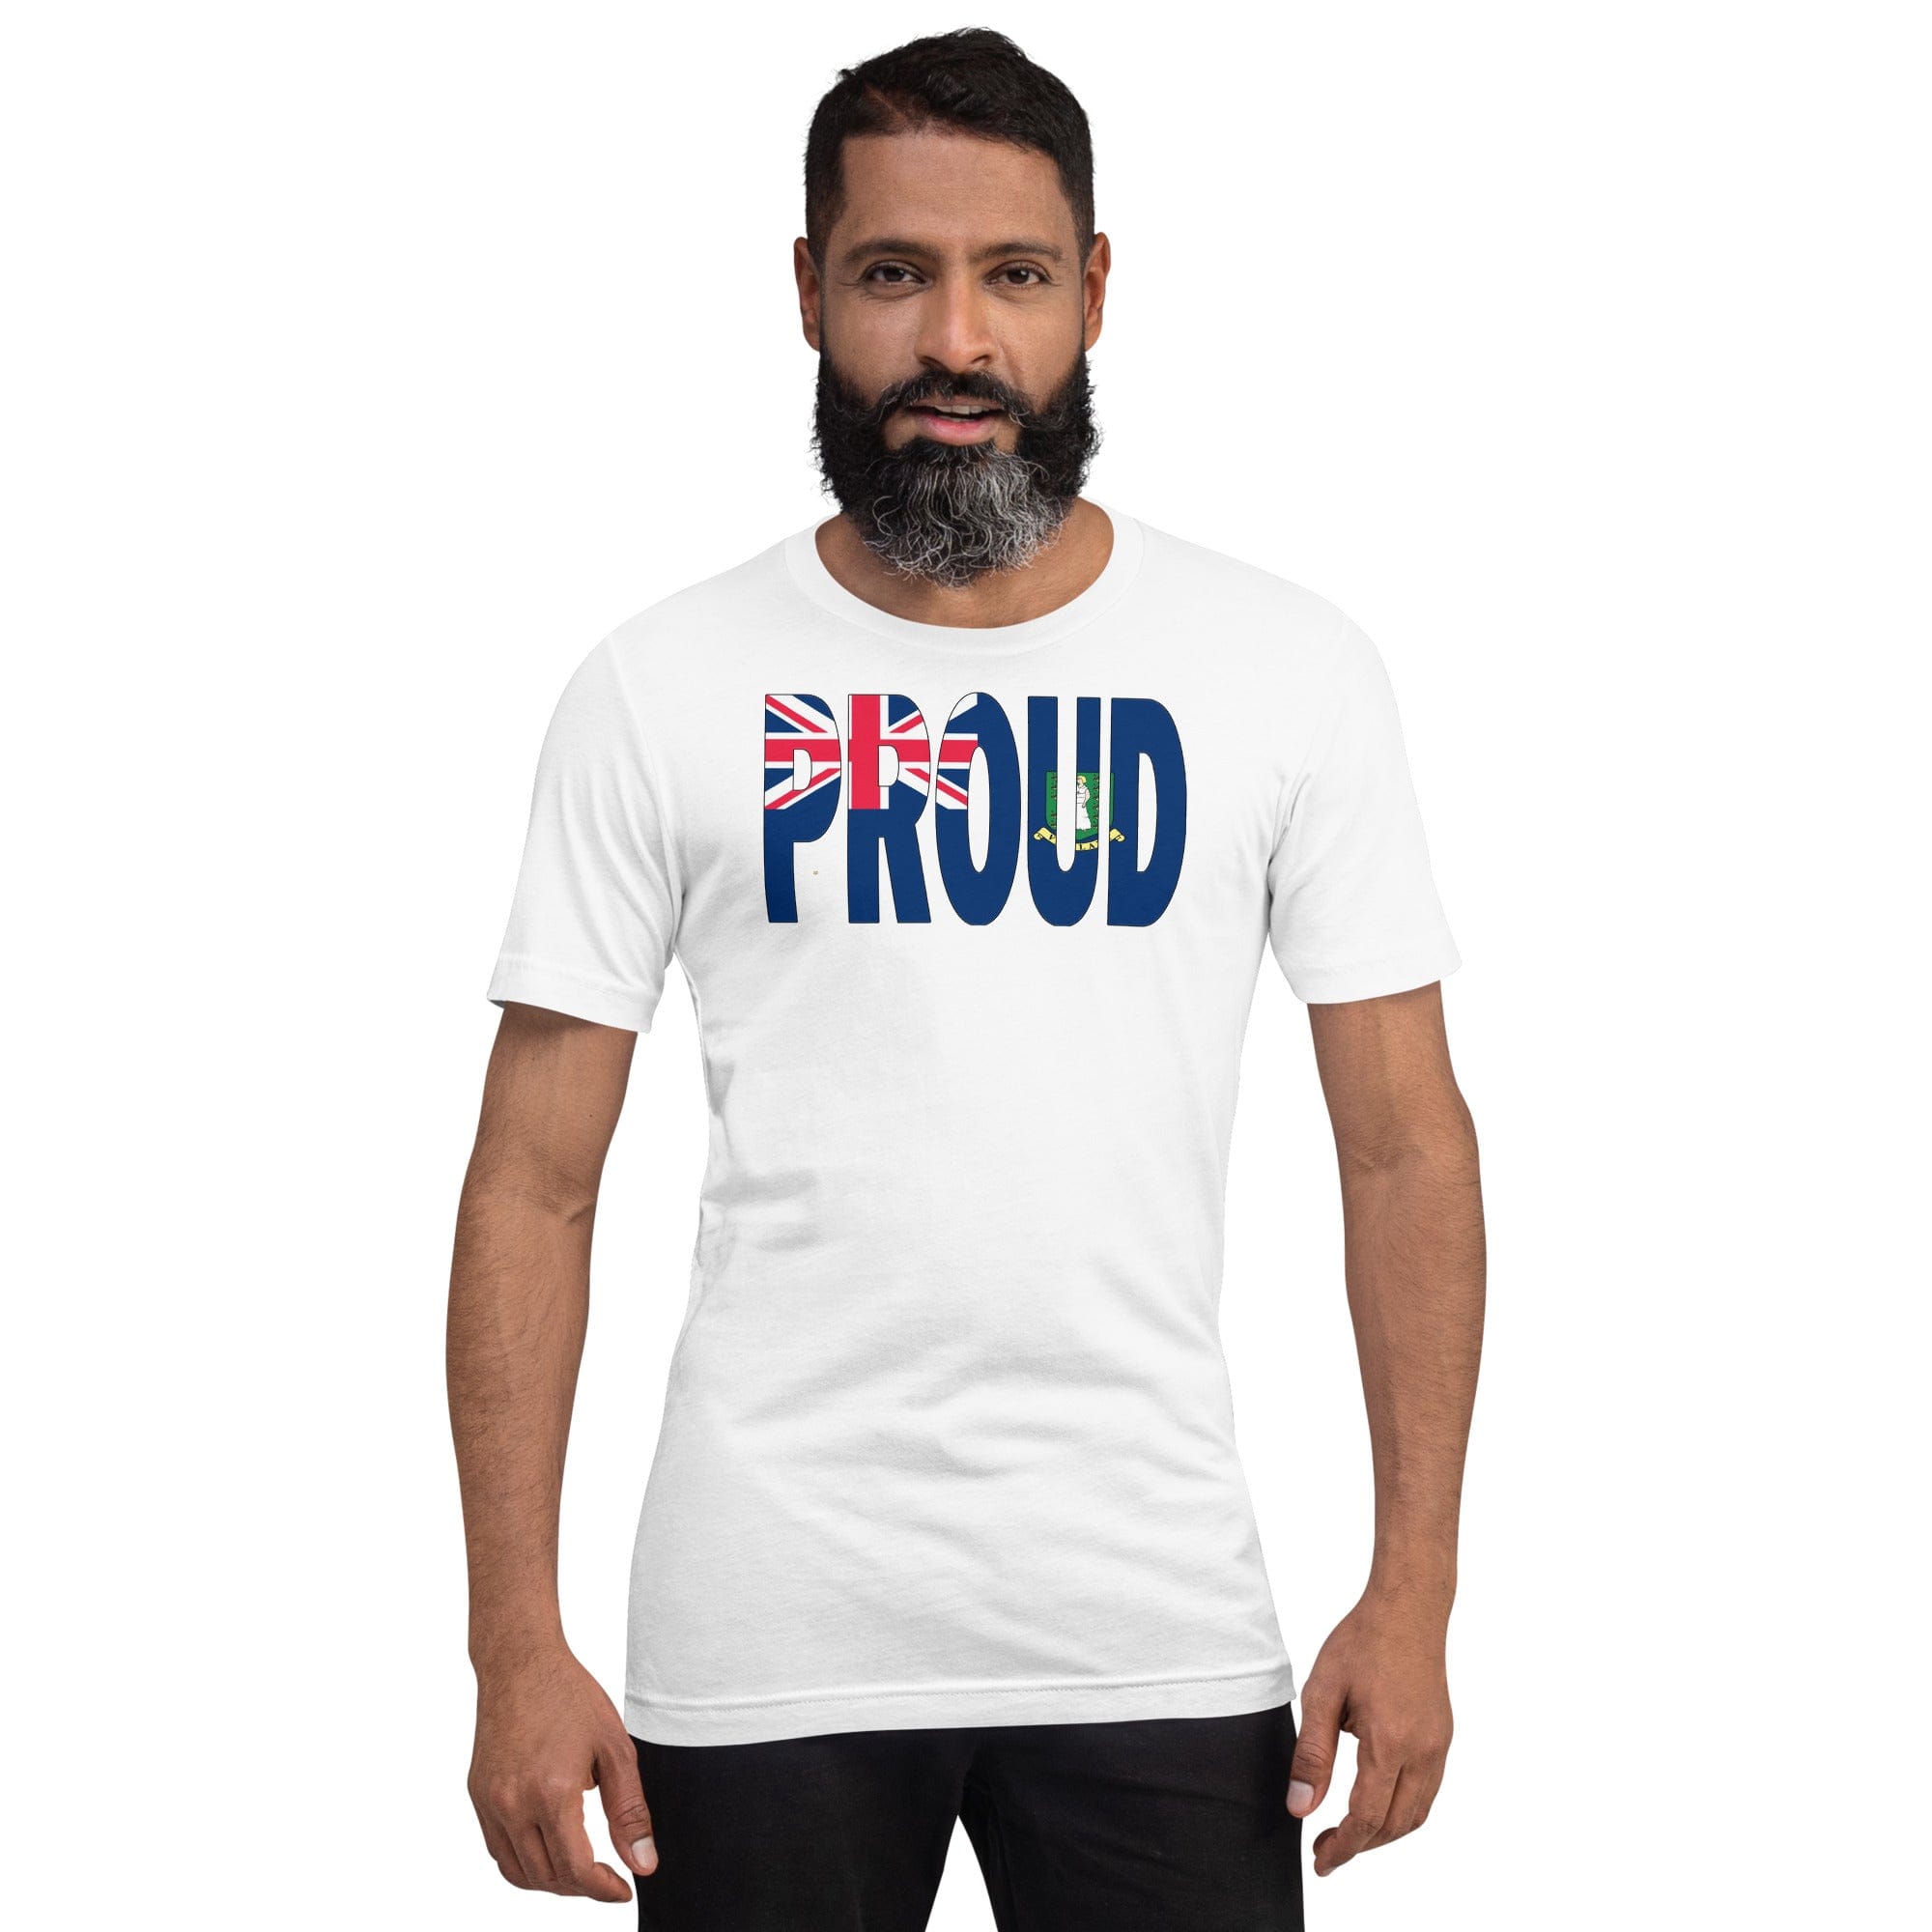 Proud British Virgin Islands Flag white color t-shirt on a black man.